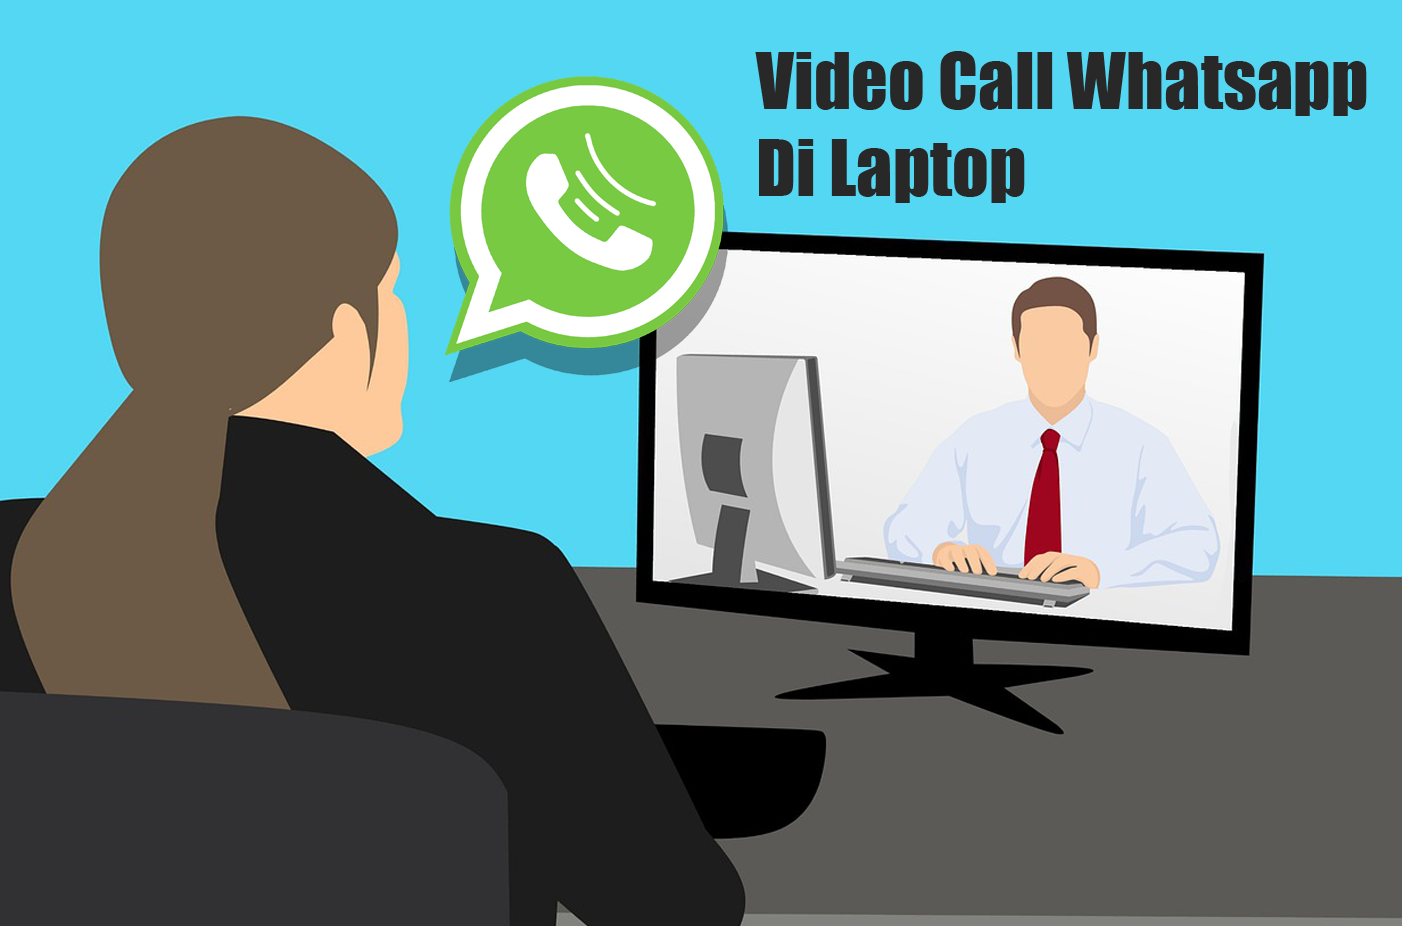 Video Call Whatsapp Di Laptop